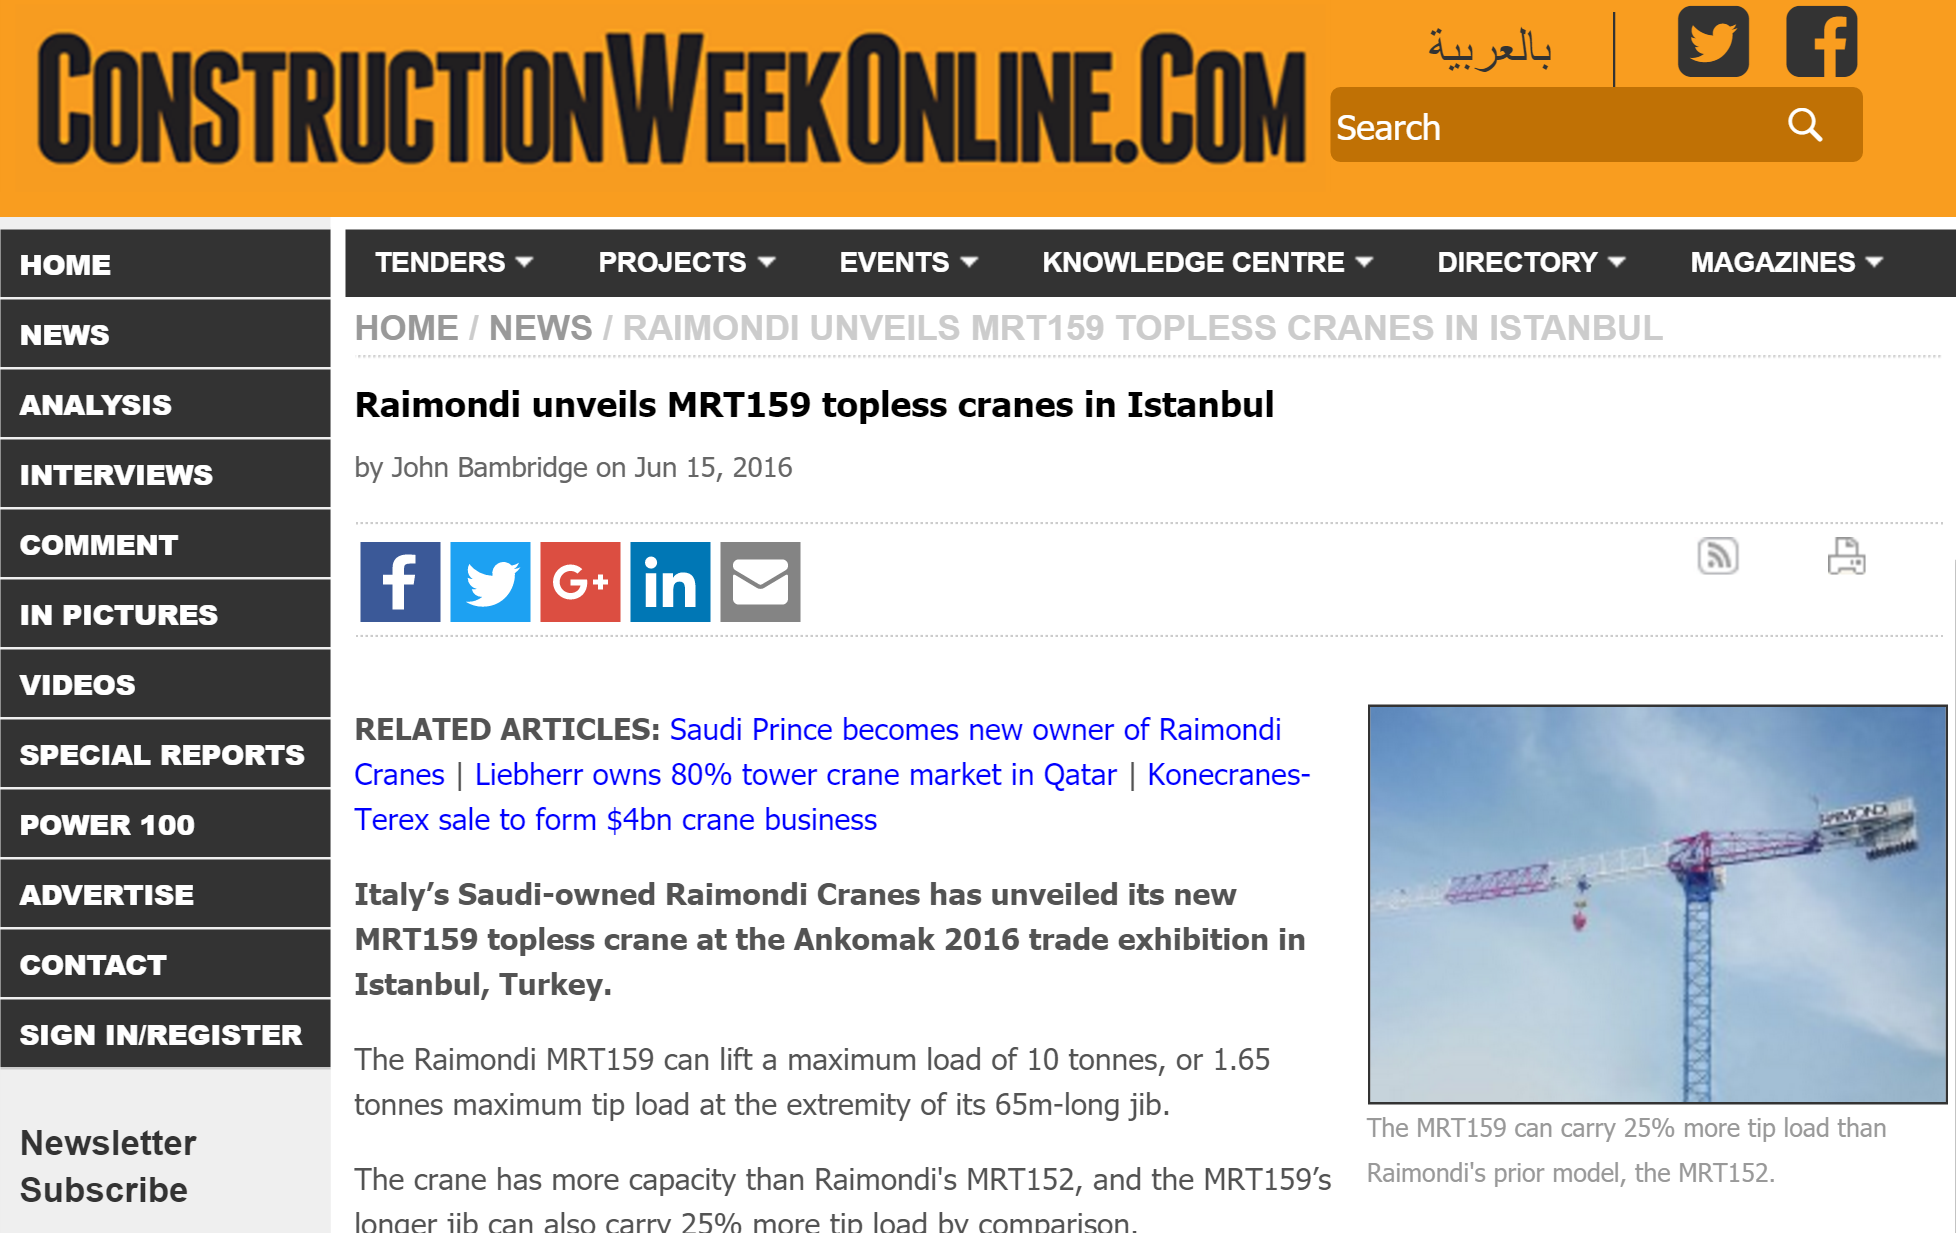 Construction Week Online: Raimondi Cranes has unveiled its new MRT159 at Ankomak 2016 trade exhibition